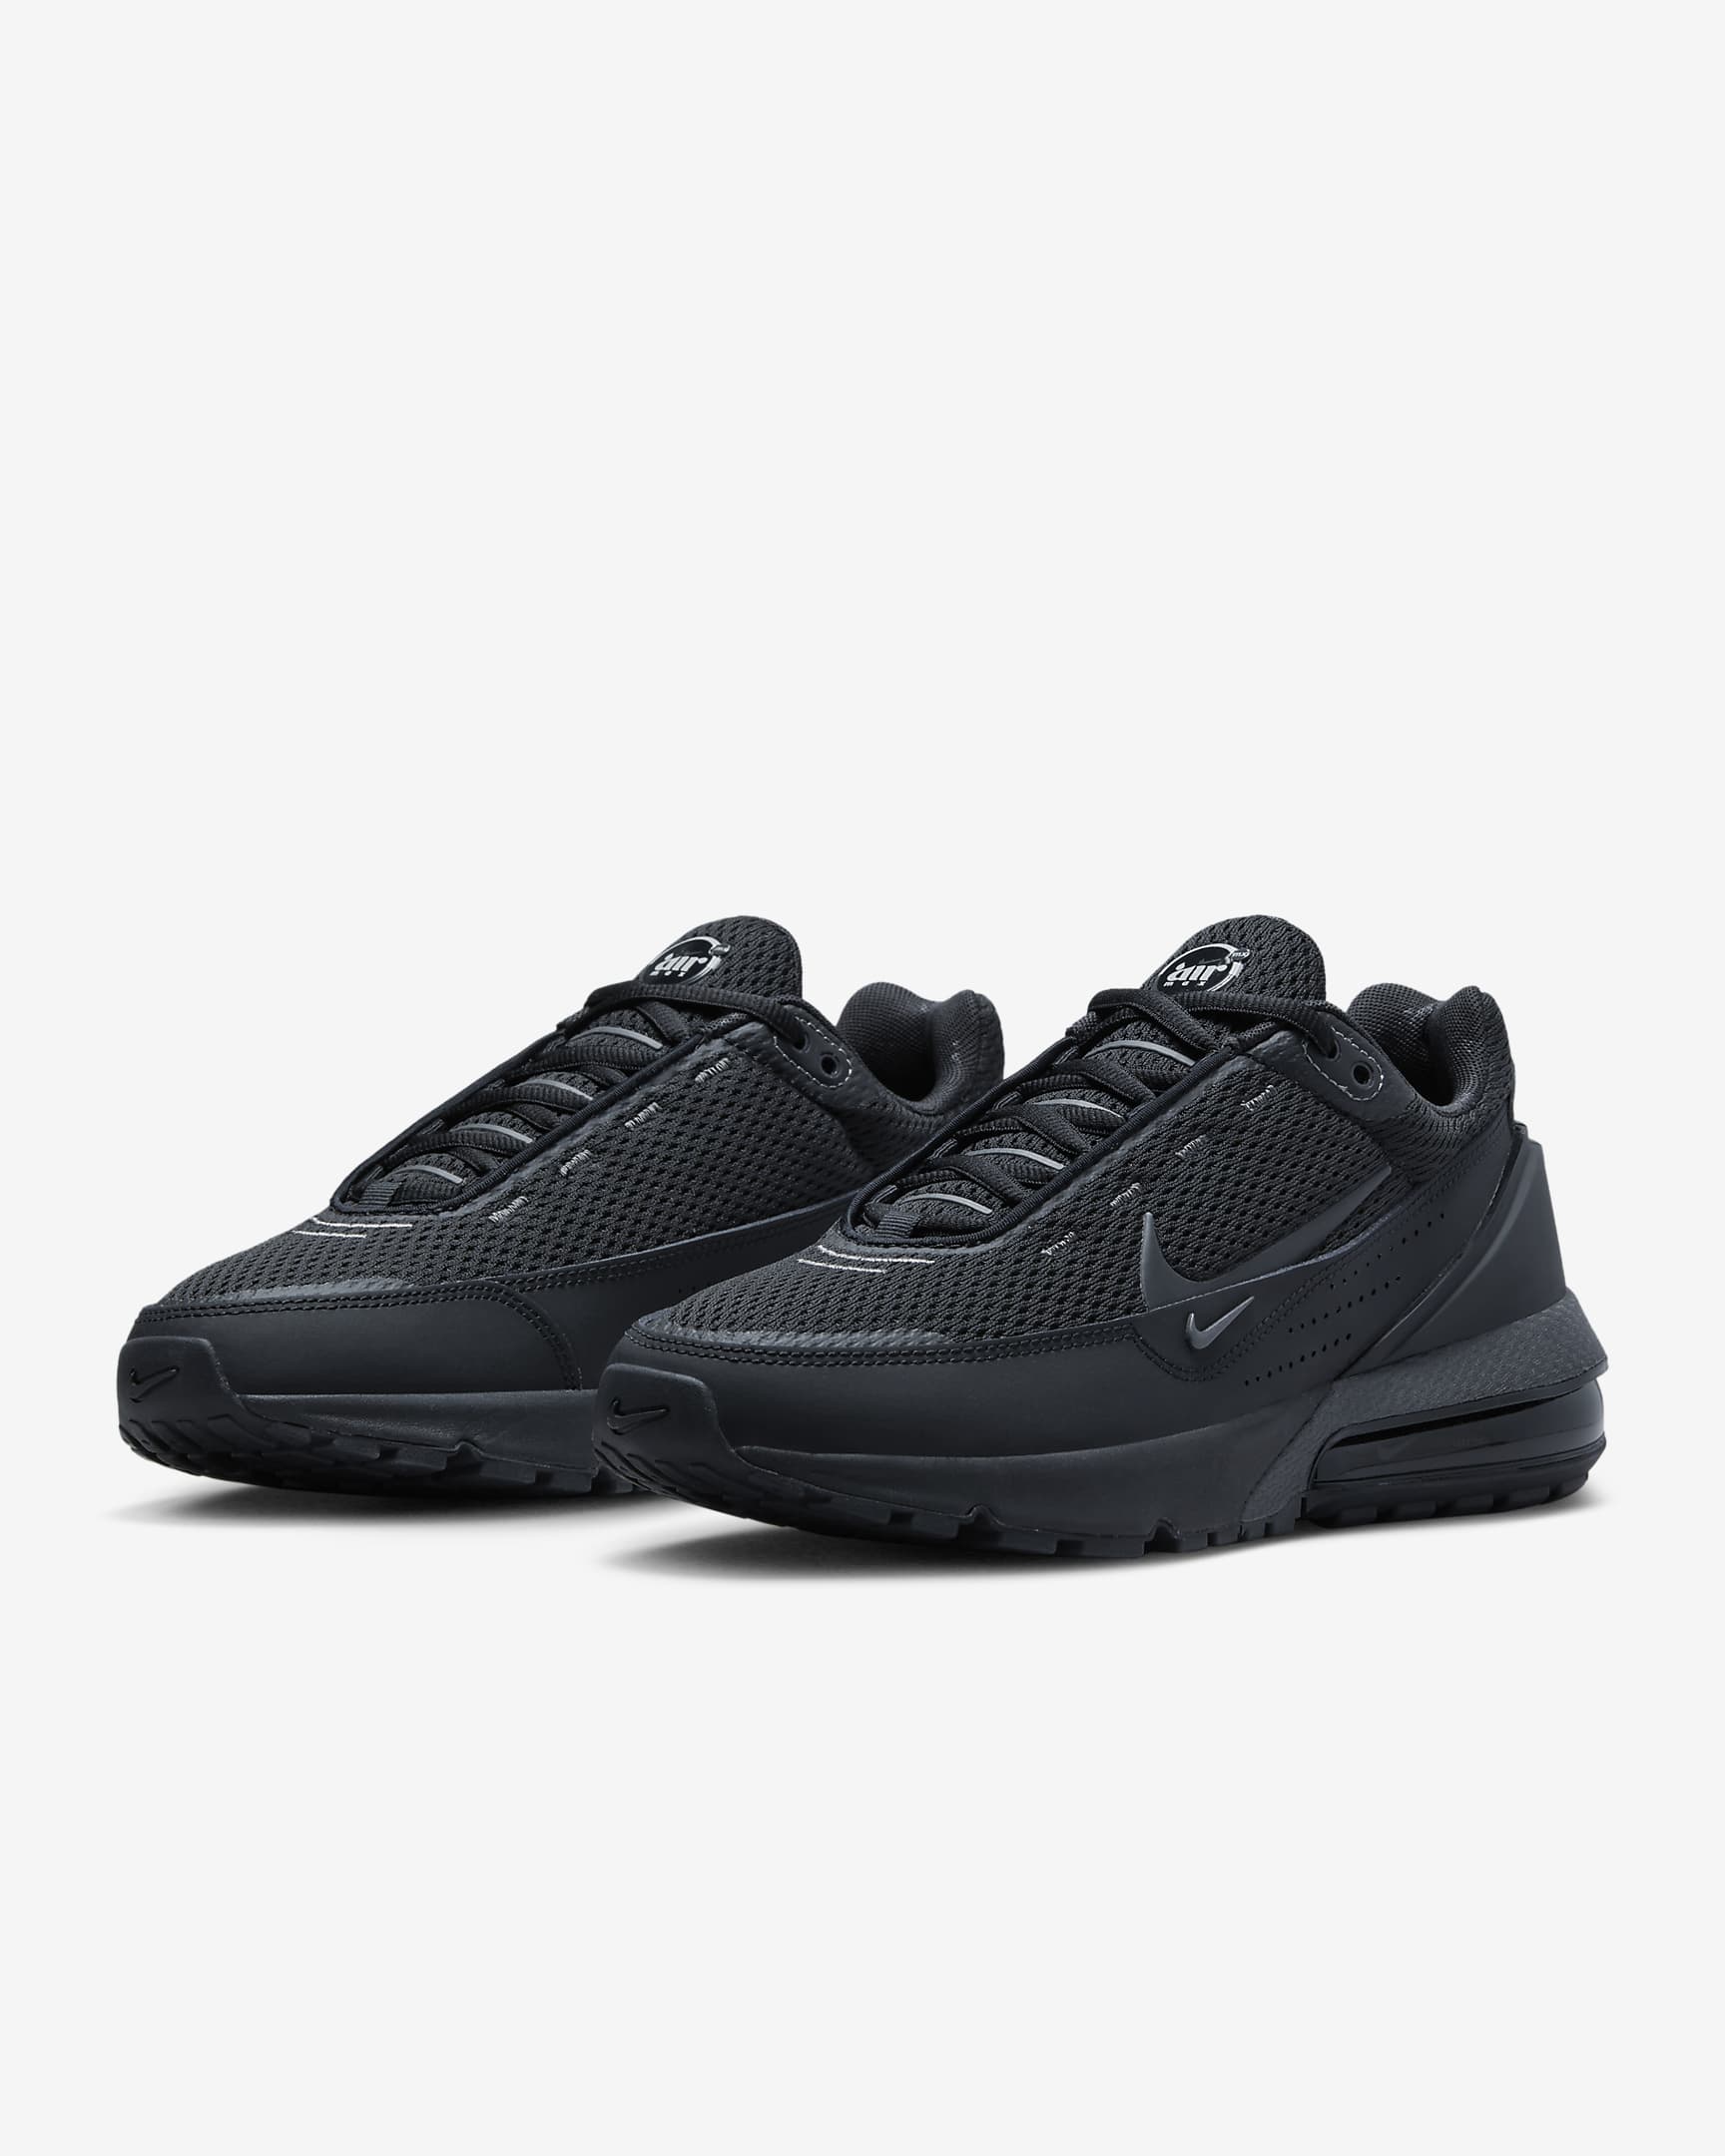 Nike Air Max Pulse Men's Shoes - Black/Anthracite/Black